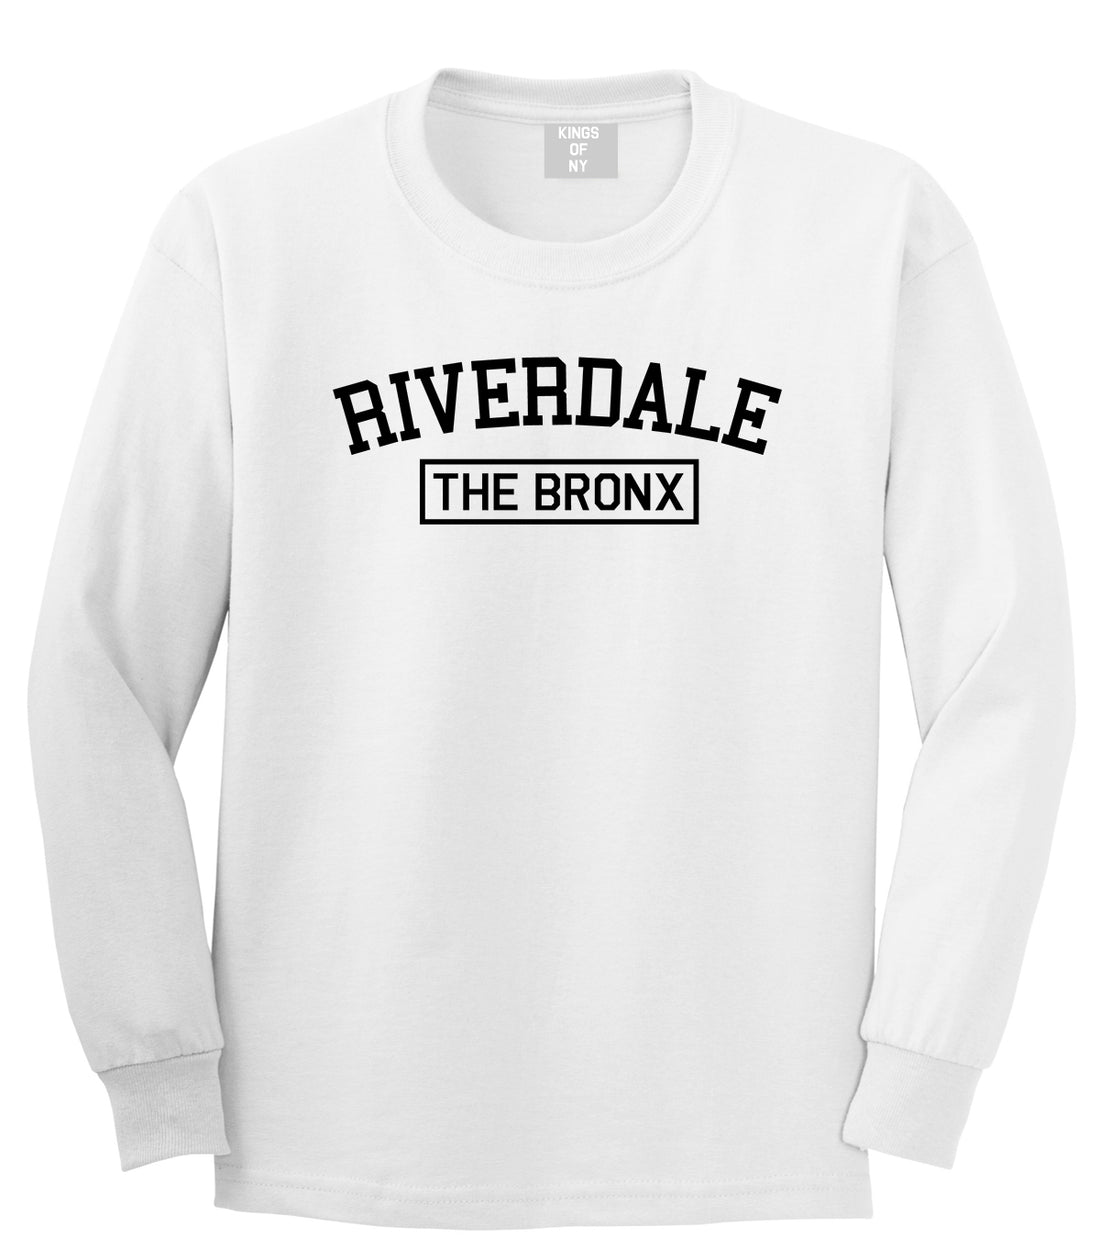 Riverdale The Bronx NY Mens Long Sleeve T-Shirt White